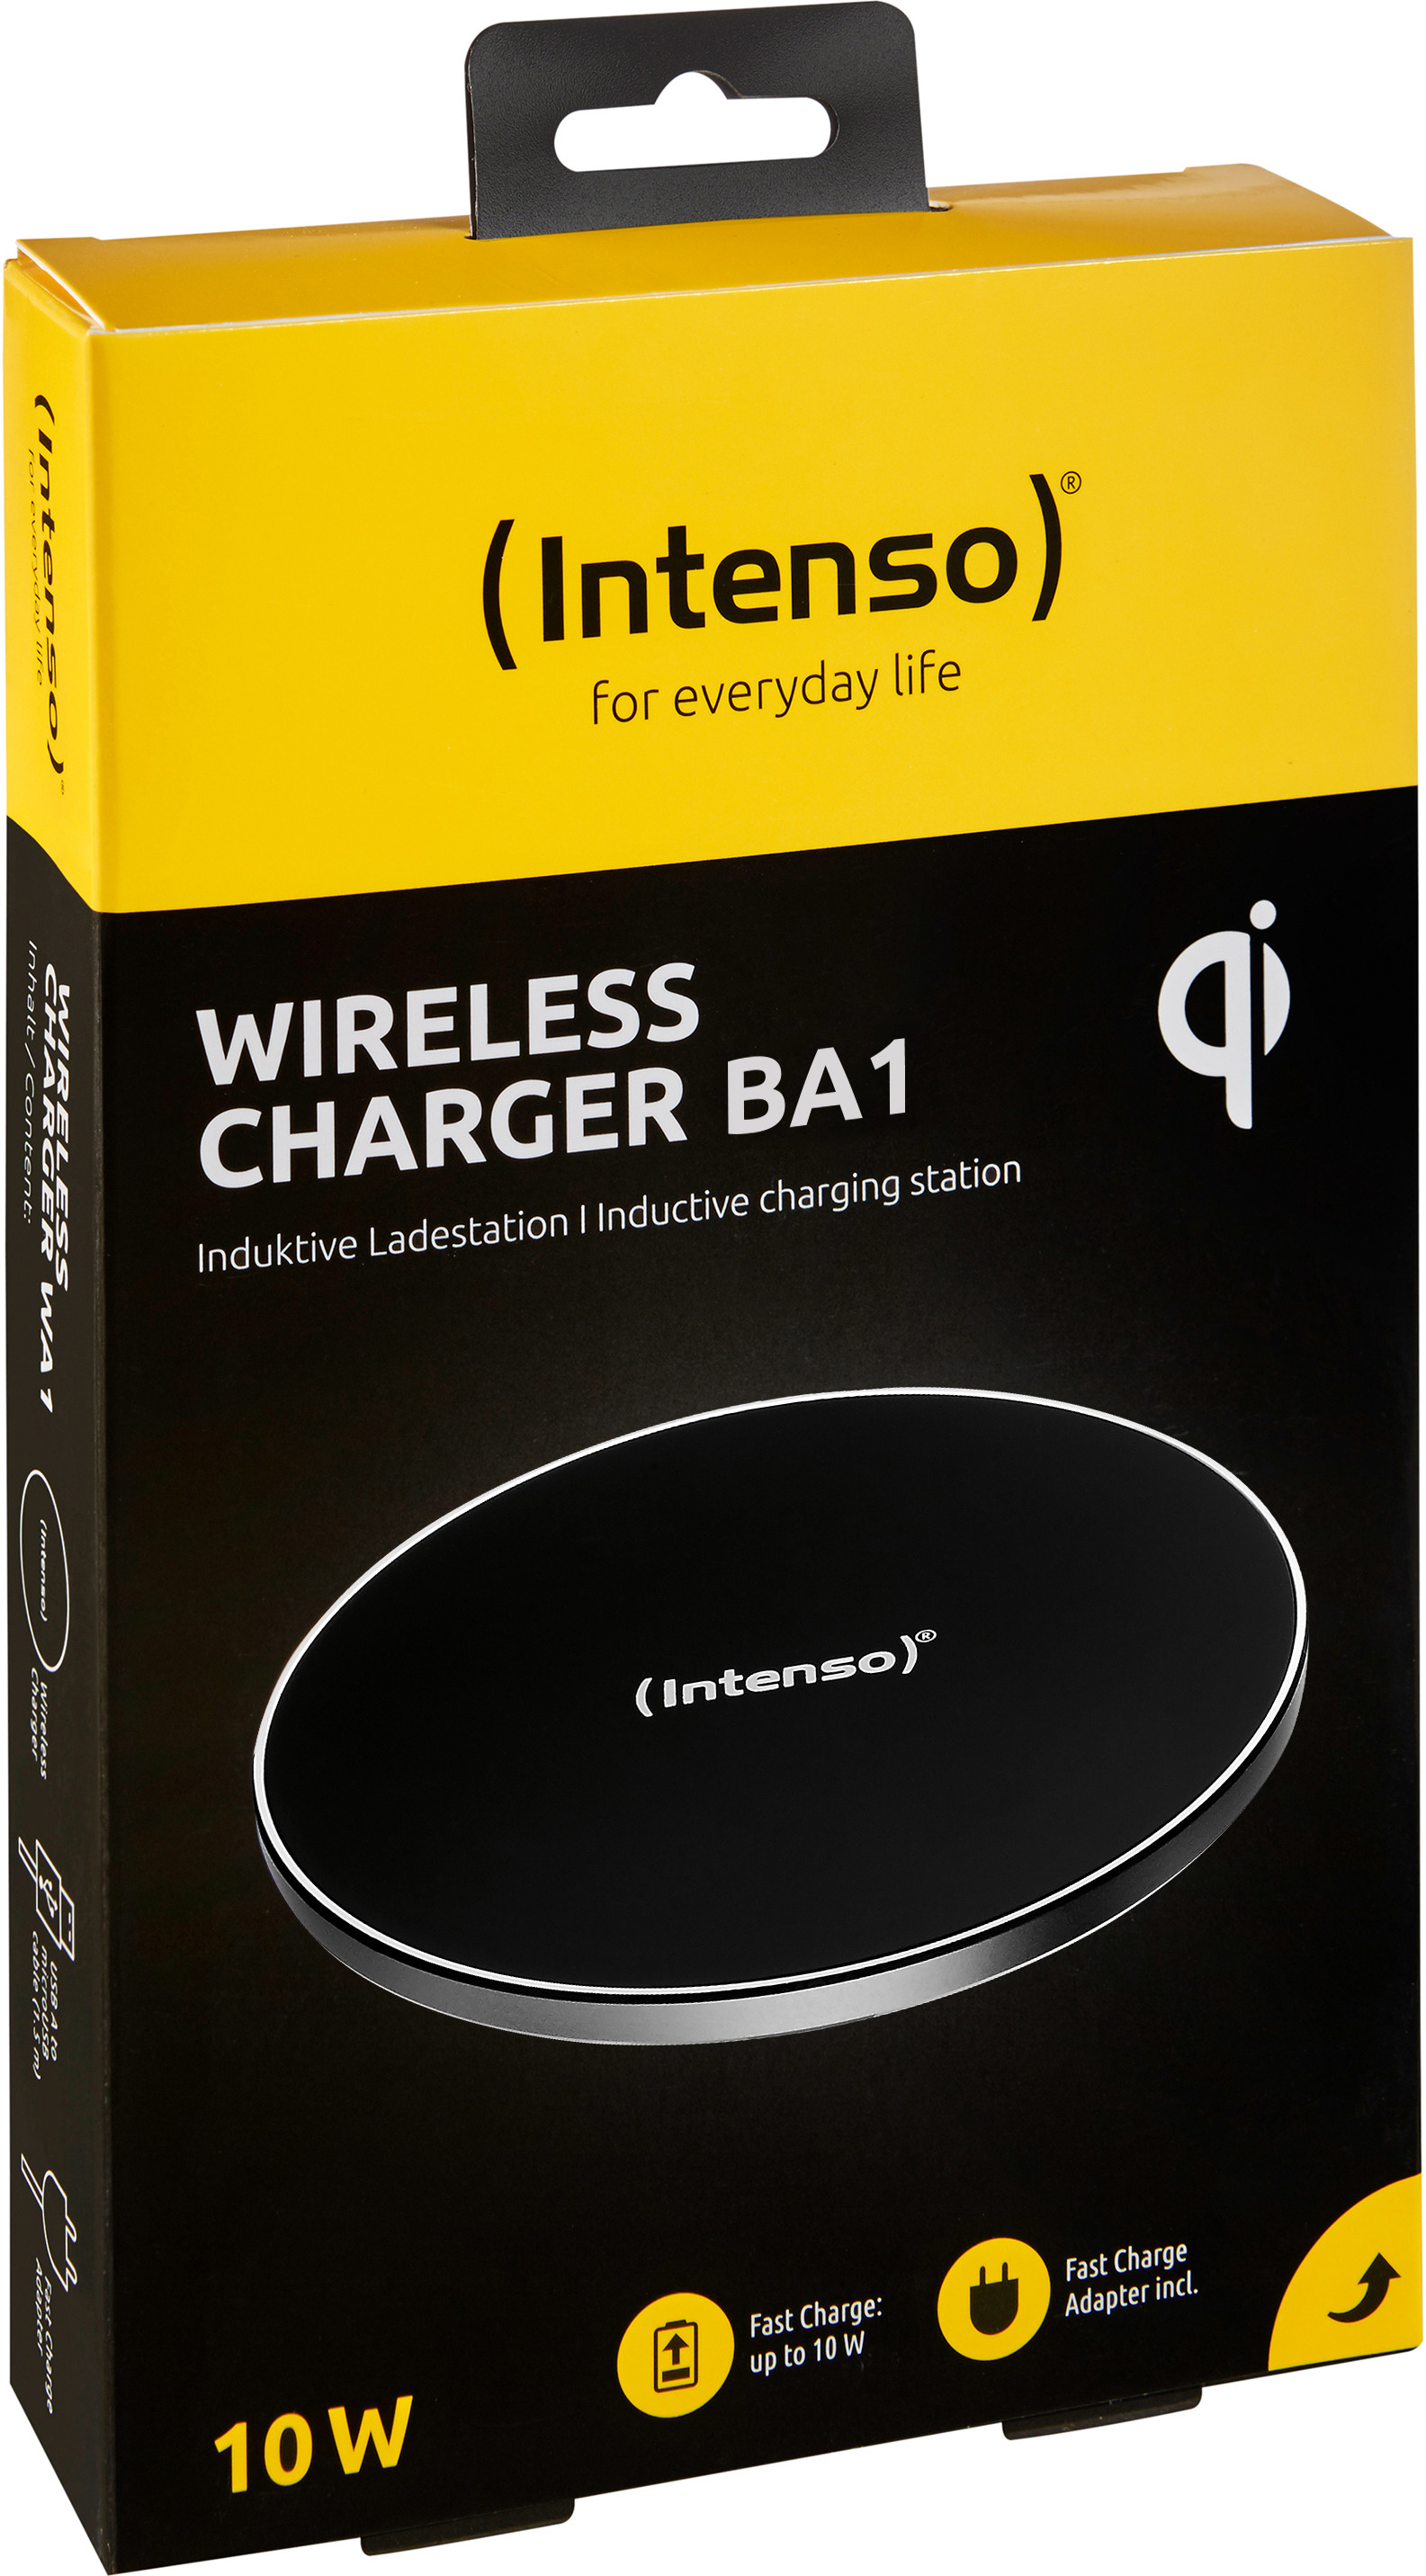 INTENSO Wireless Charger BA1 black 7410510